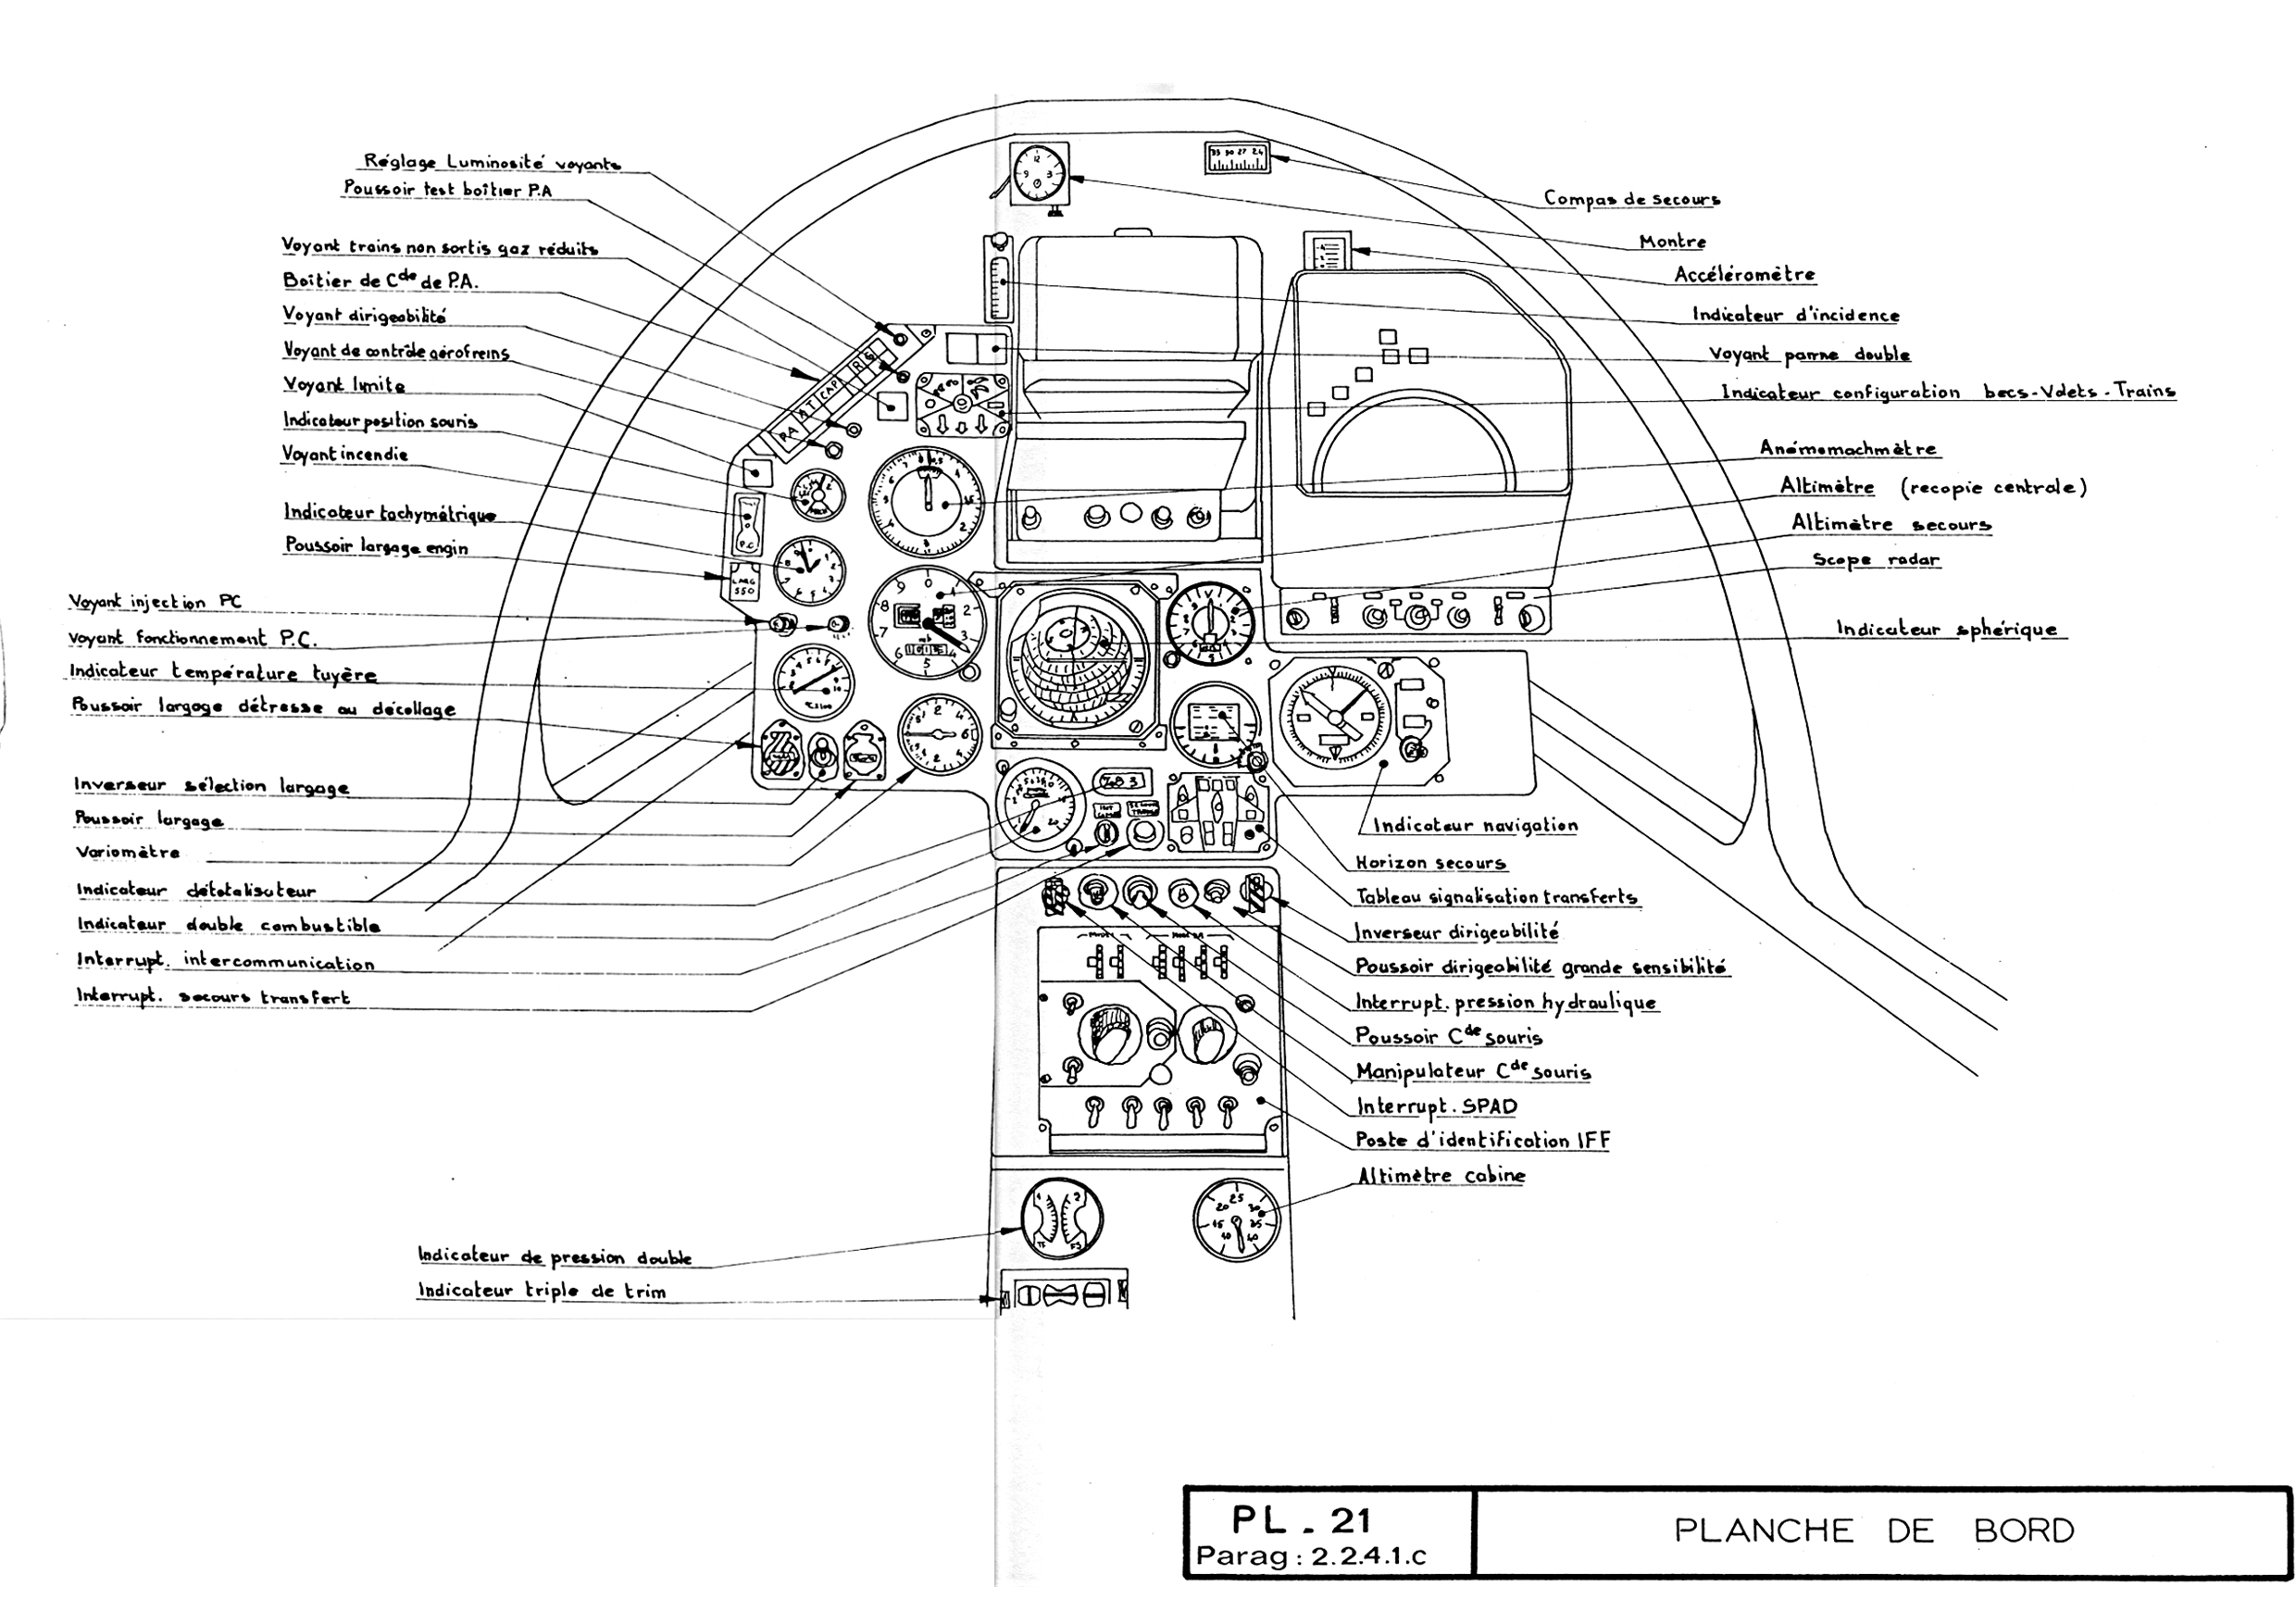 Mirage F1 blueprint